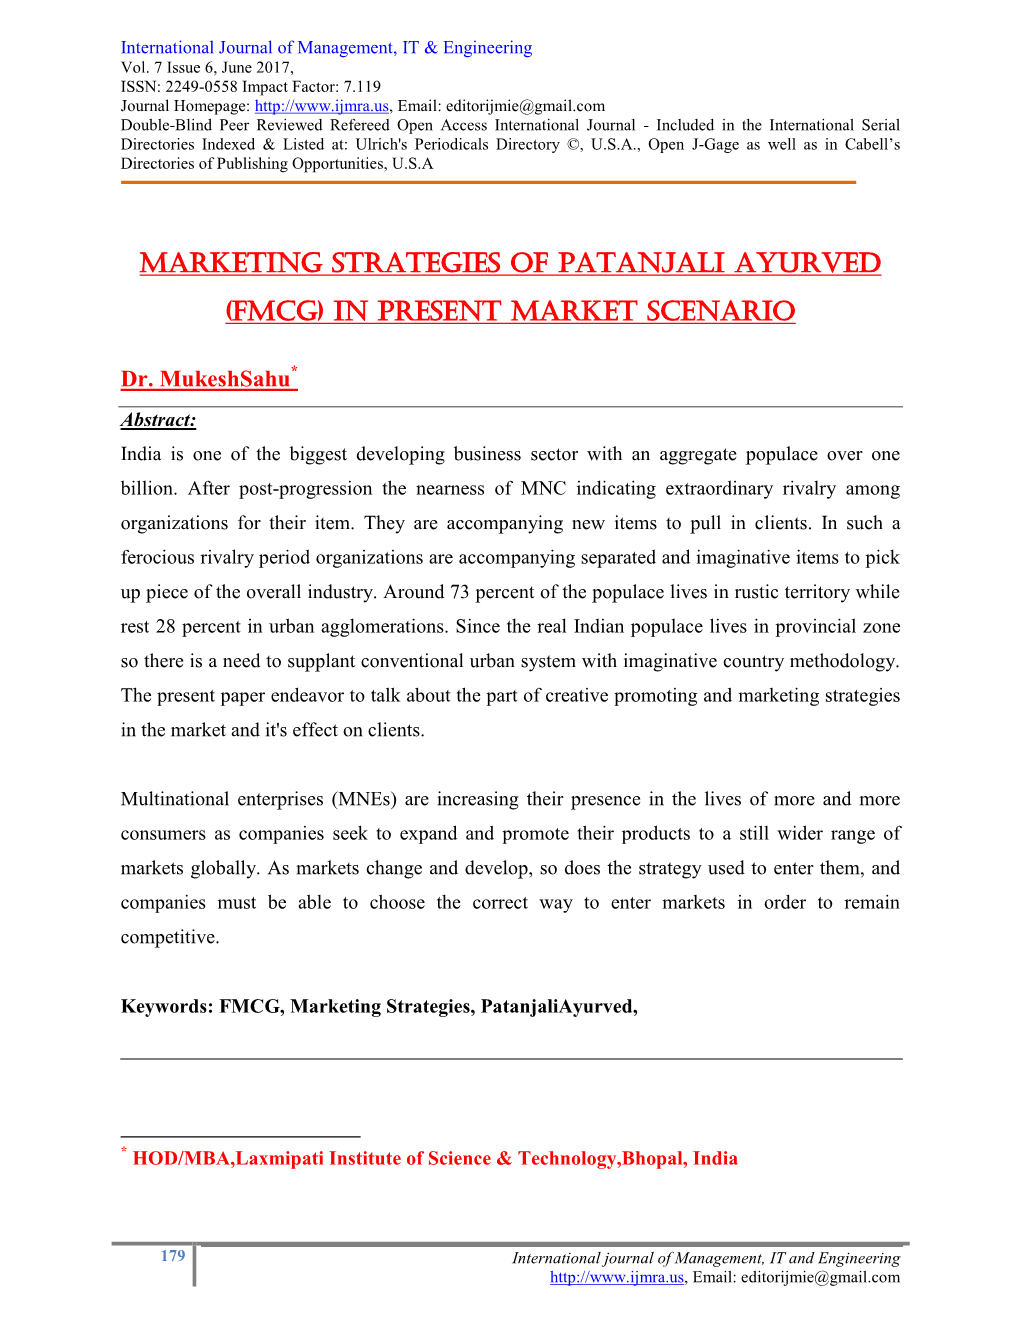 Marketing Strategies of Patanjali Ayurved (FMCG) in Present Market Scenario